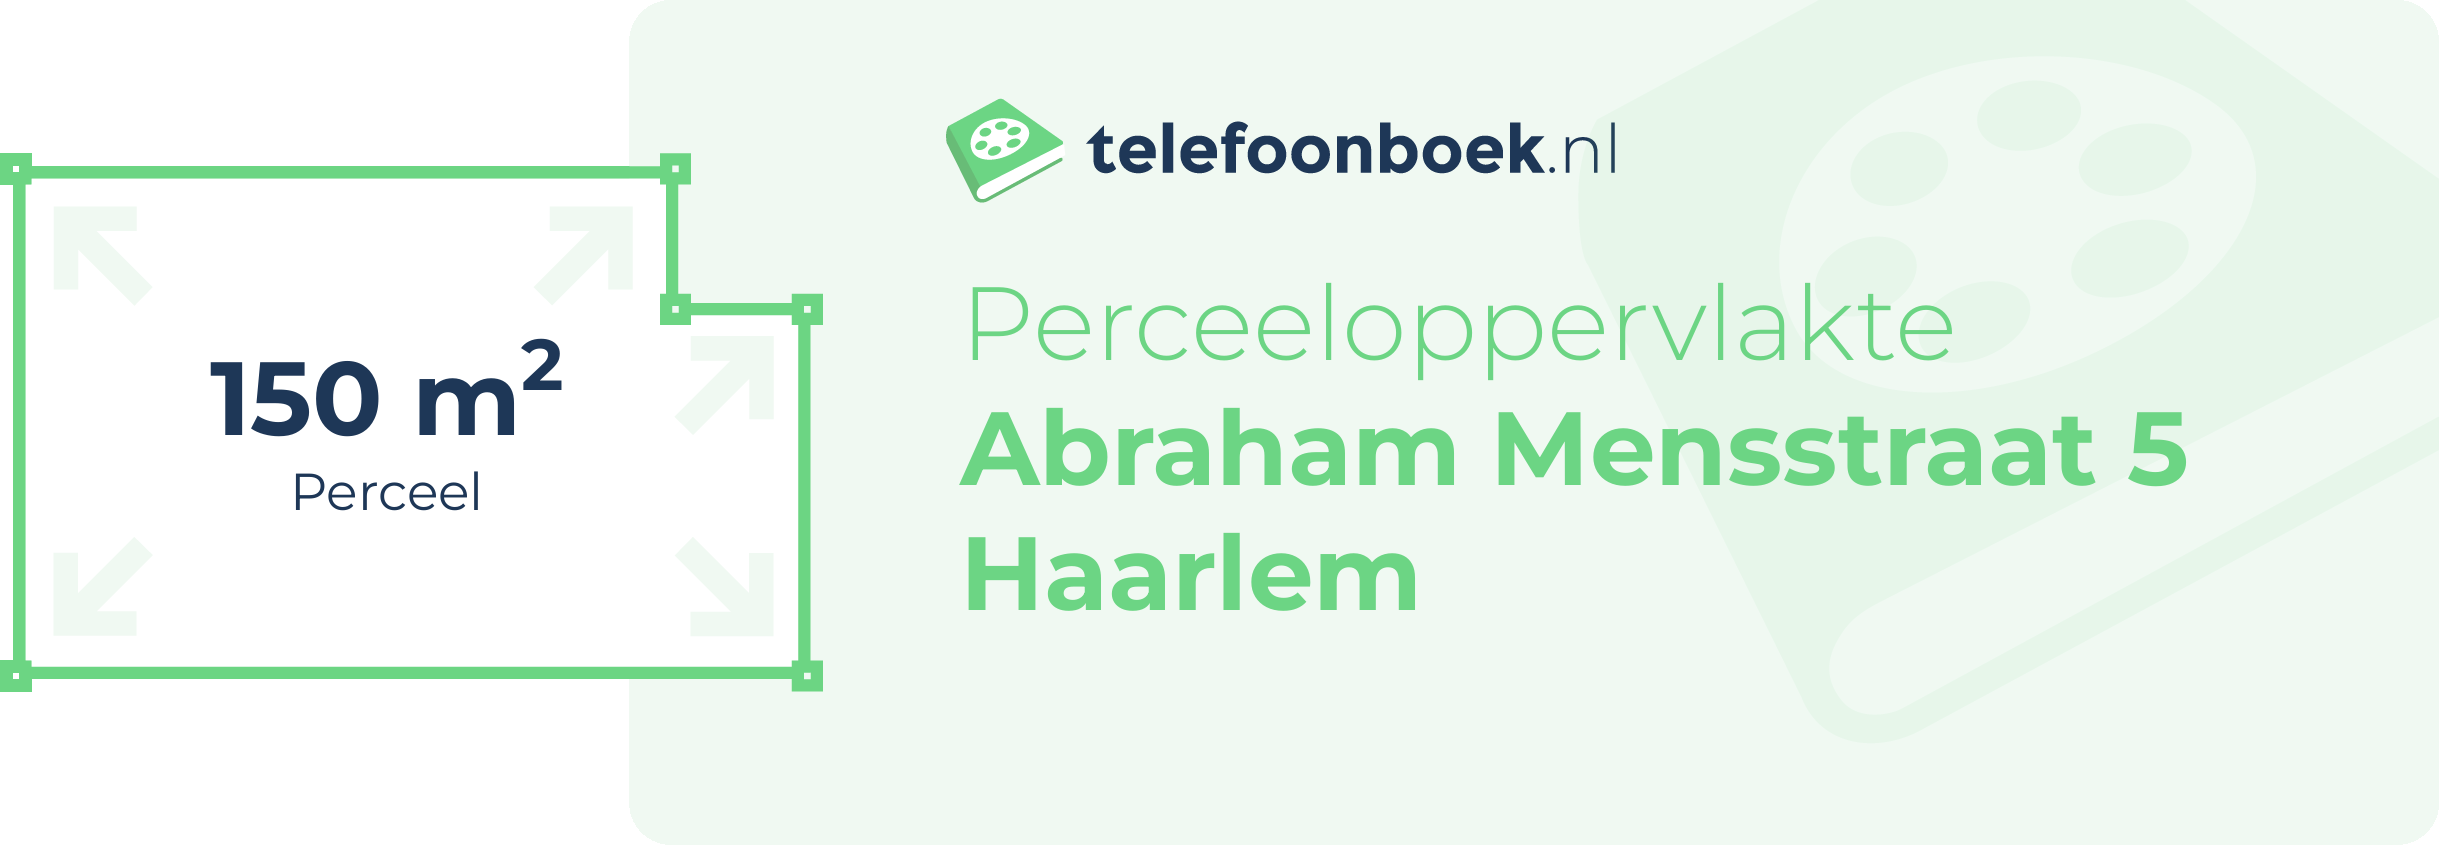 Perceeloppervlakte Abraham Mensstraat 5 Haarlem